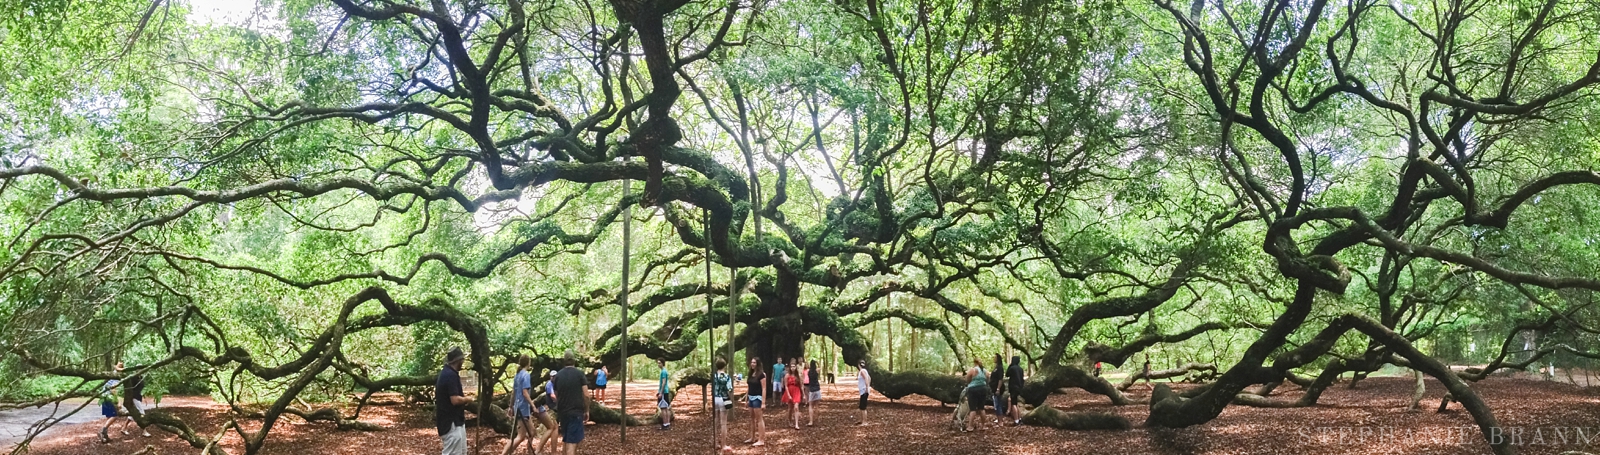 angel-oak-tree-panorama-picture